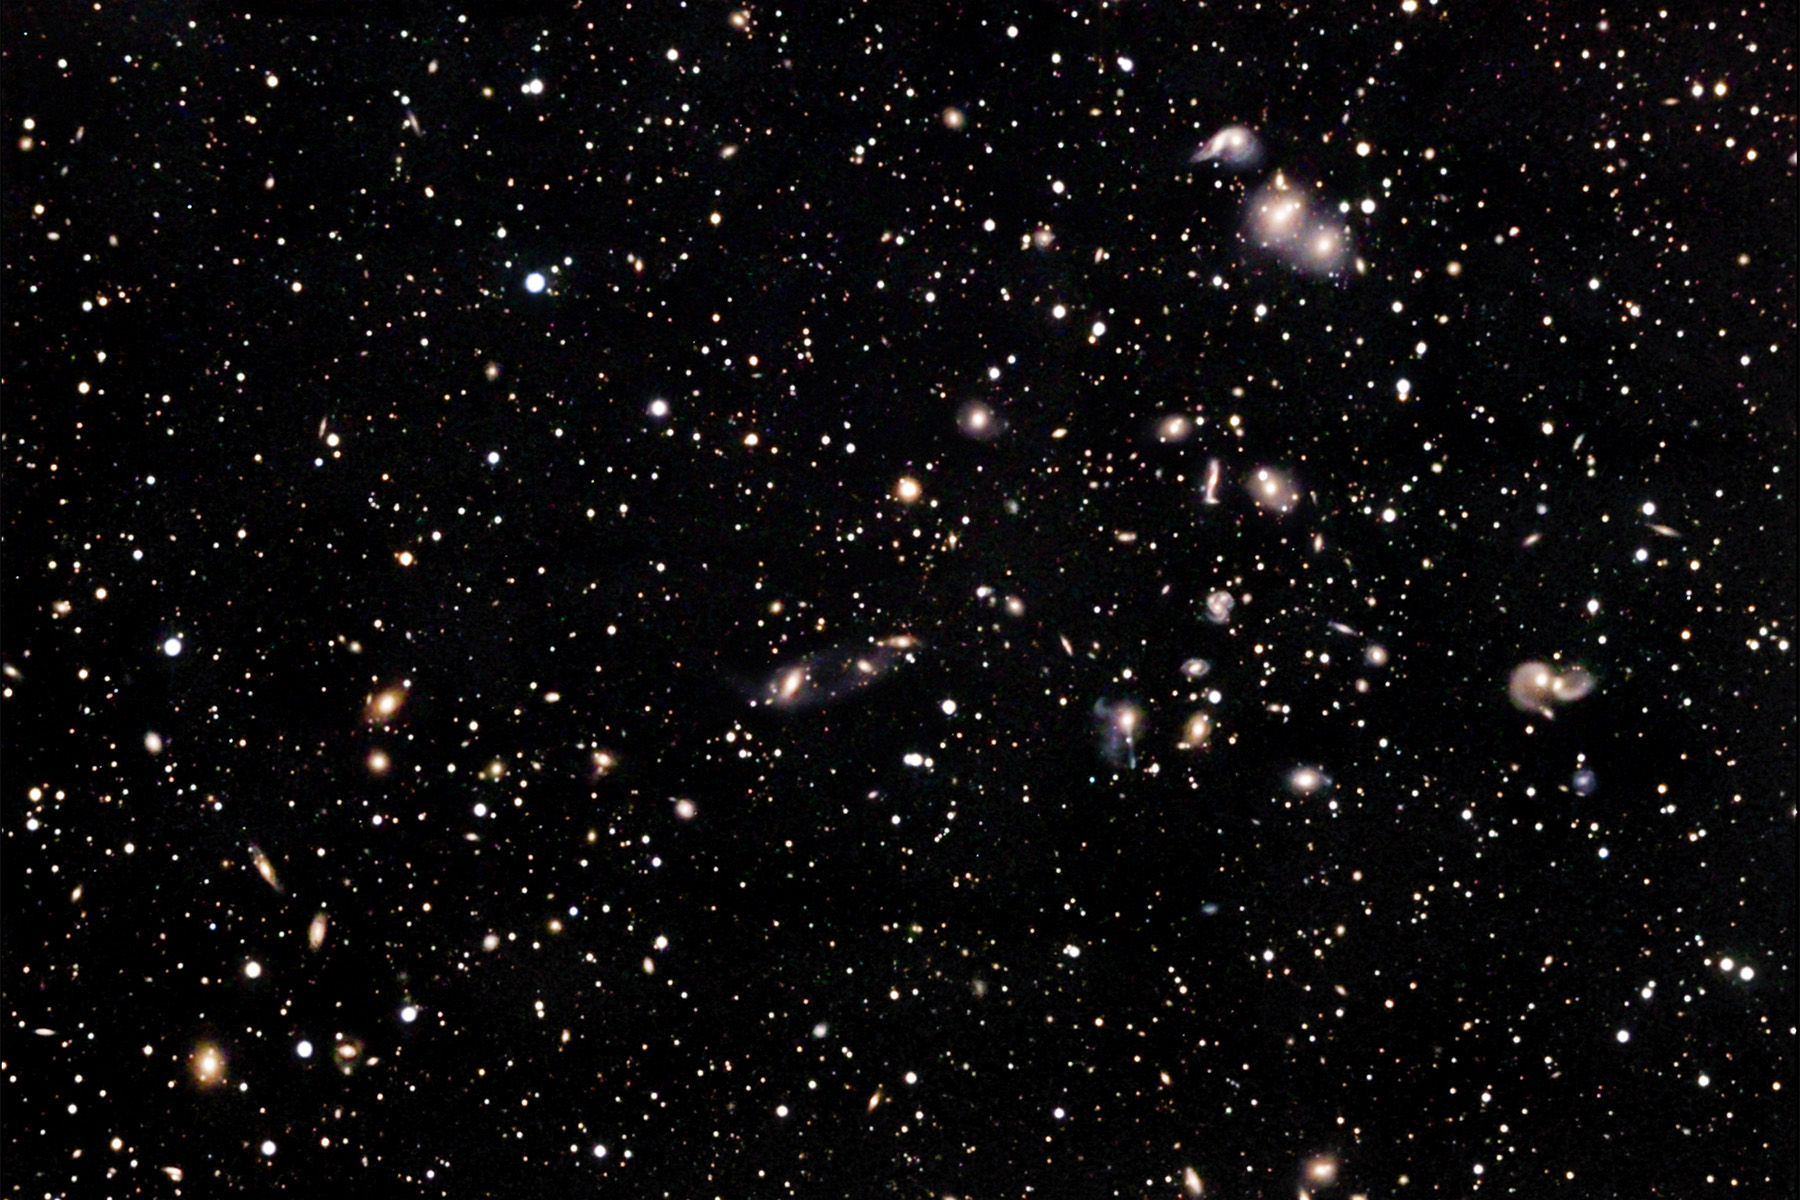 hercules galaxy cluster